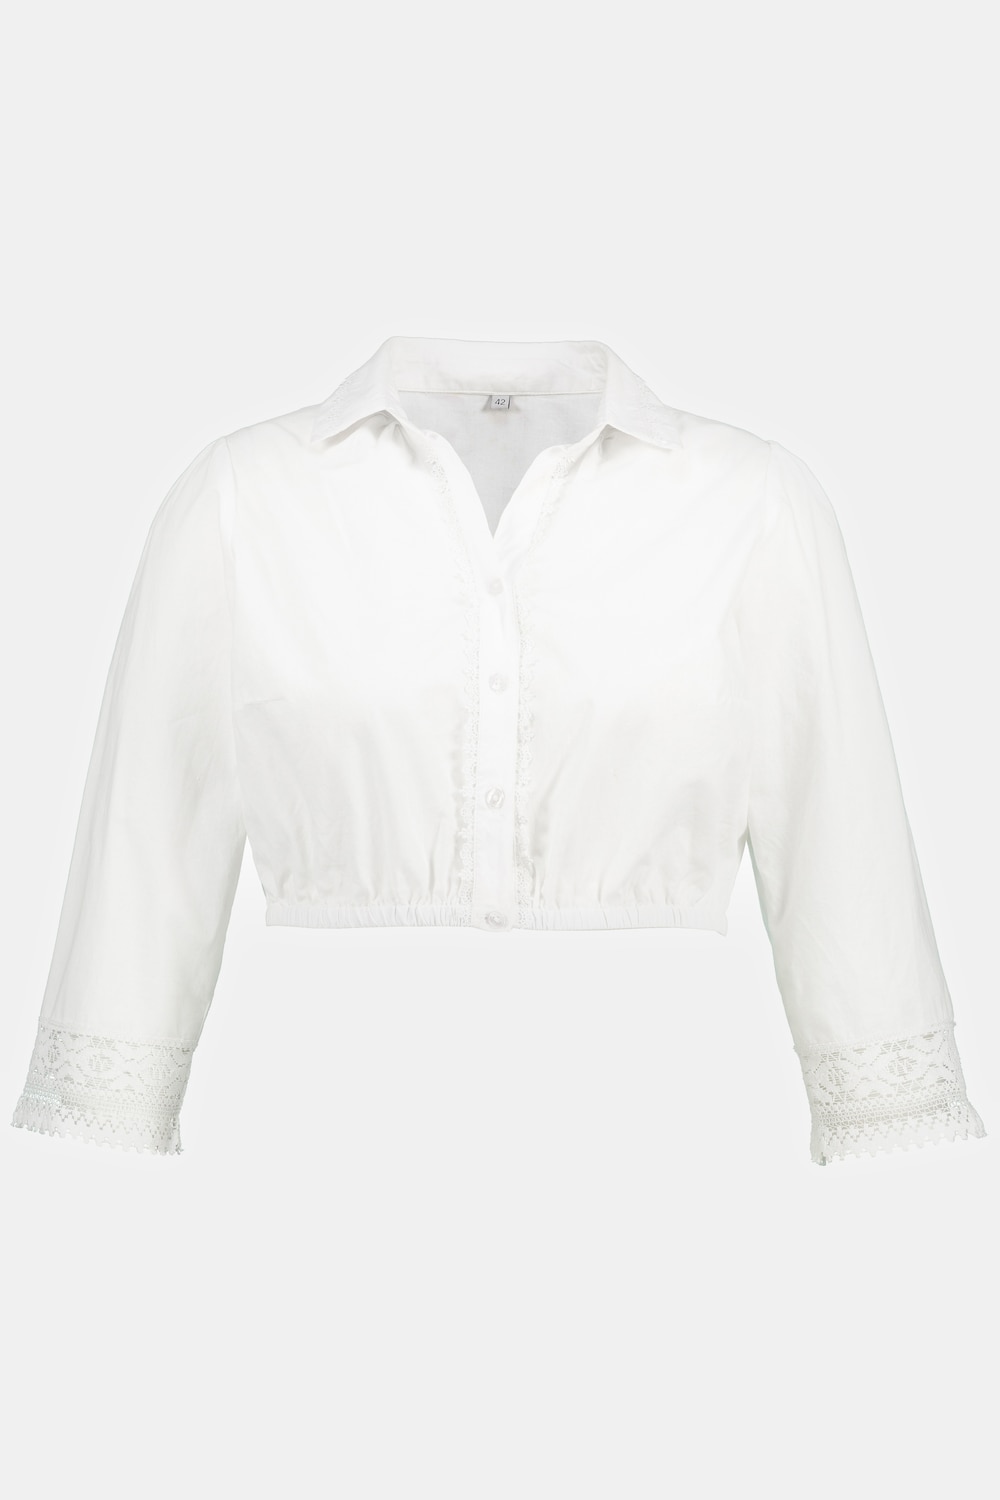 Grote Maten folklore blouse, Dames, wit, Maat: 48, Polyester/Katoen, Ulla Popken